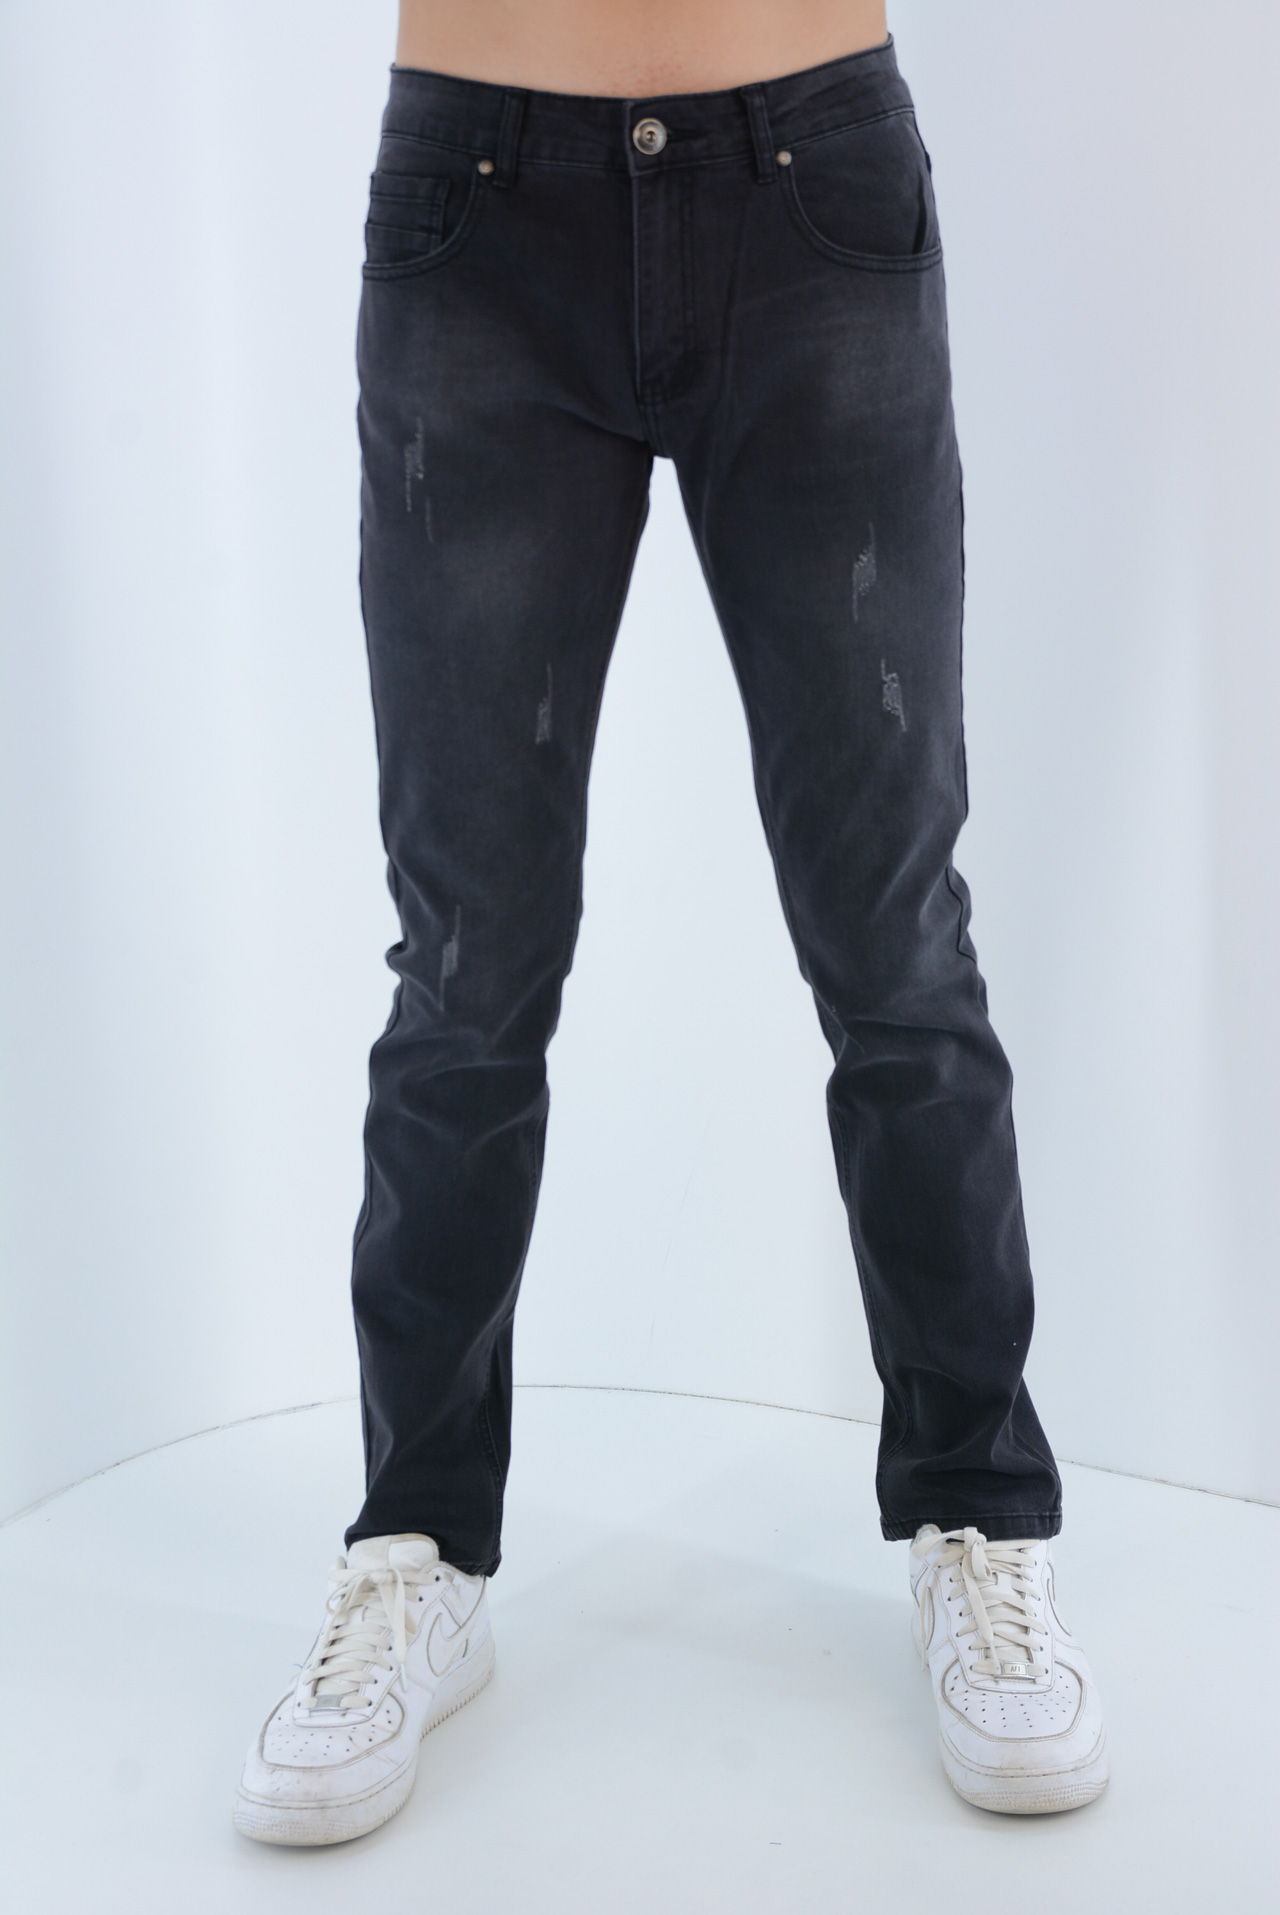 Denim jeans male black code JMJK150 front view